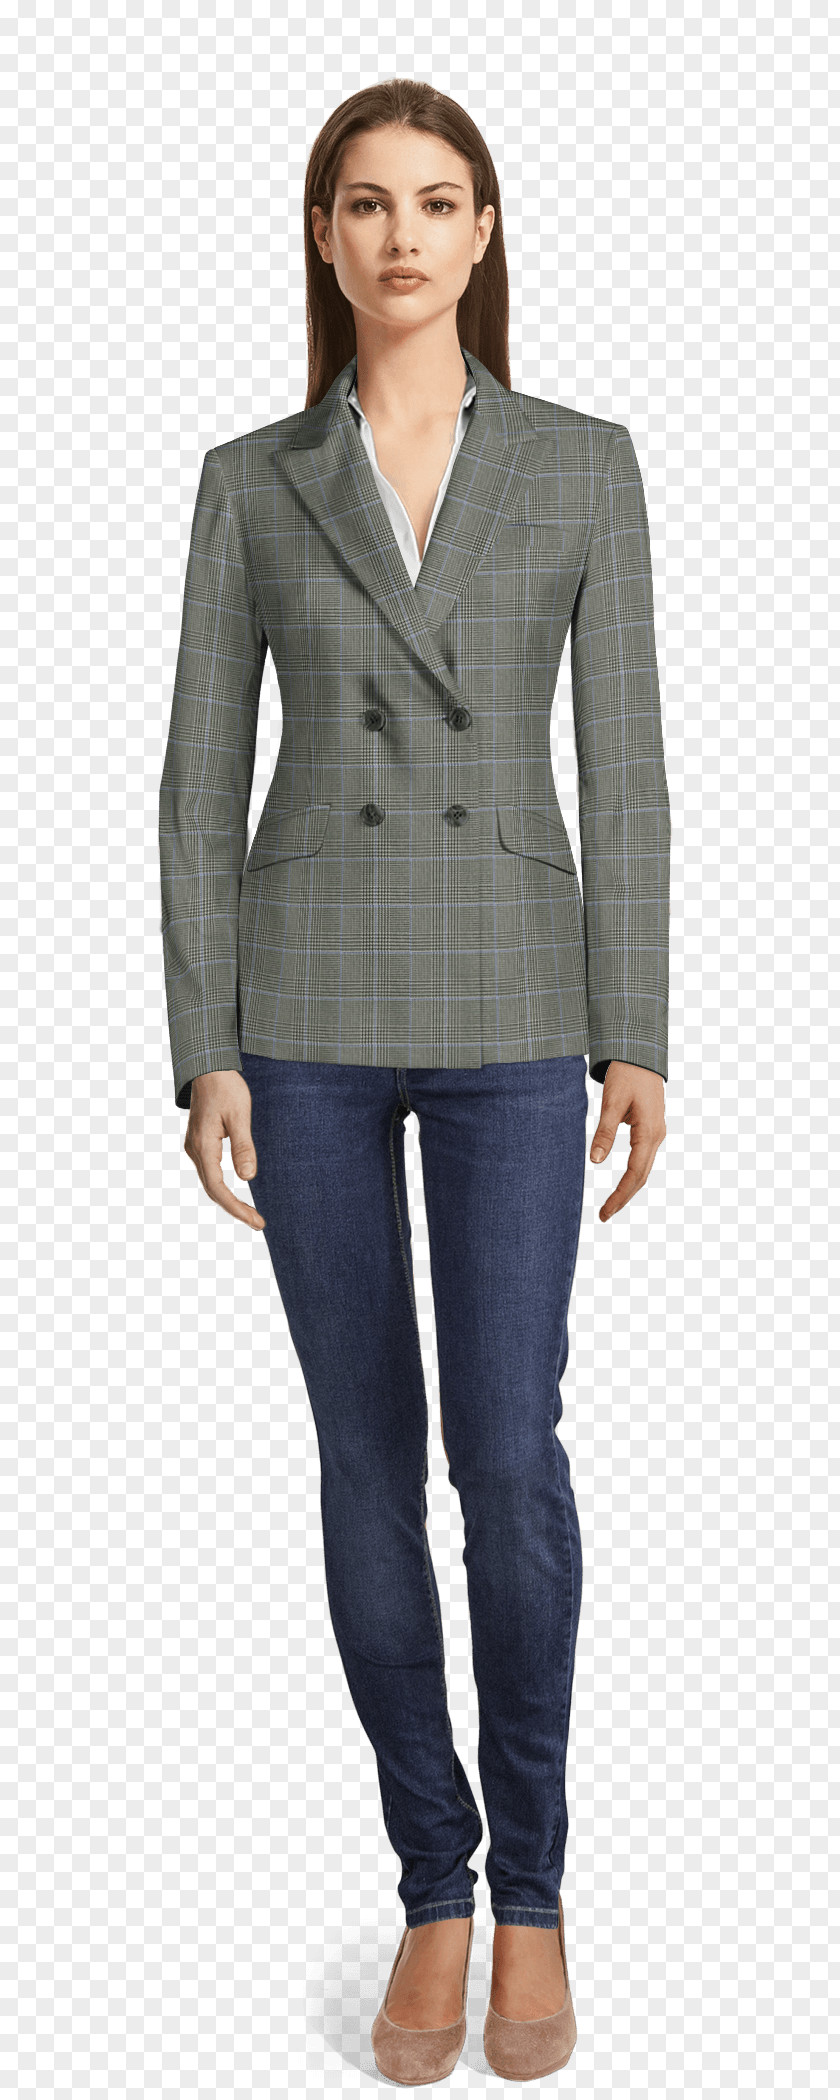 Tailor Jacket Clothing Suit Pants Blazer PNG